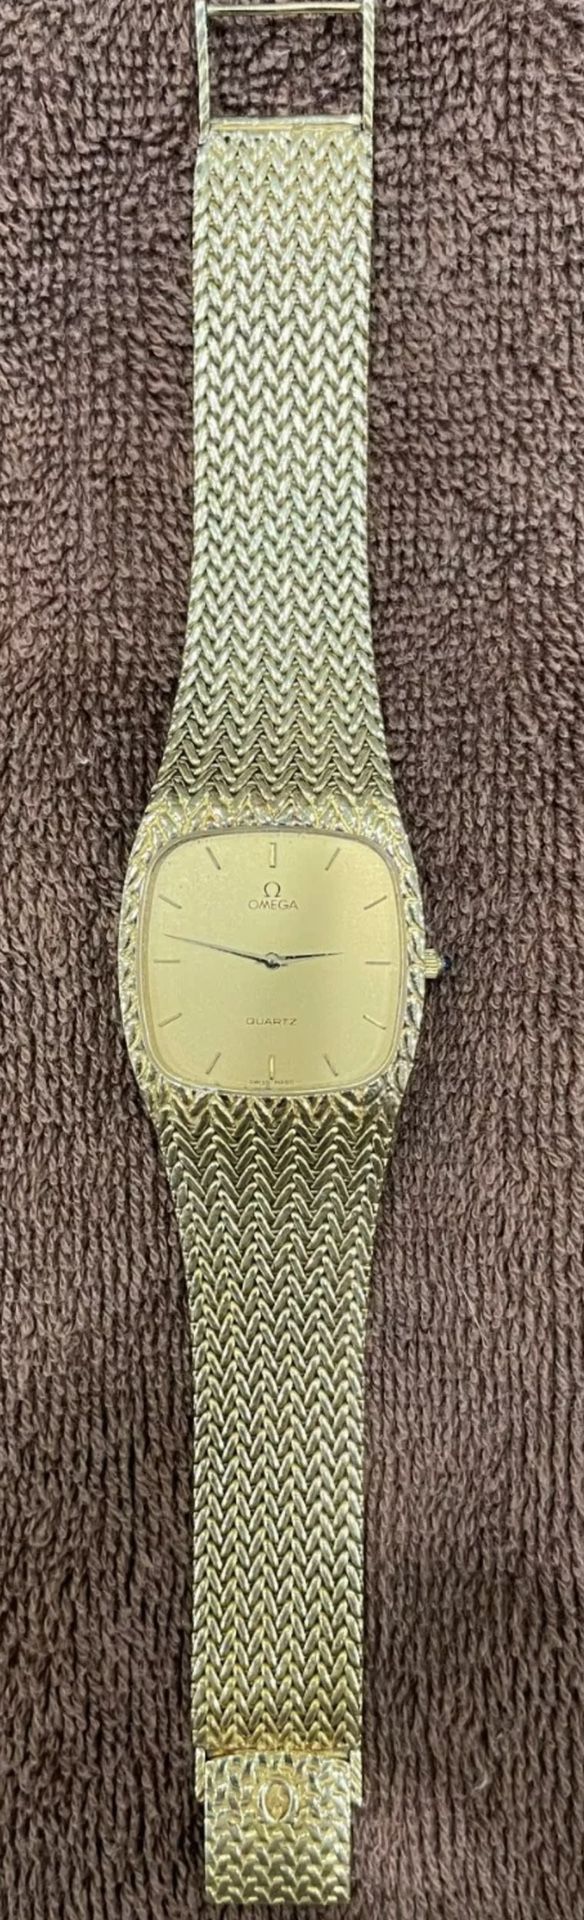 Omega 14k Men’s Gold Vintage Watch - 80’s Hardly Worn - PRICE LOWERED